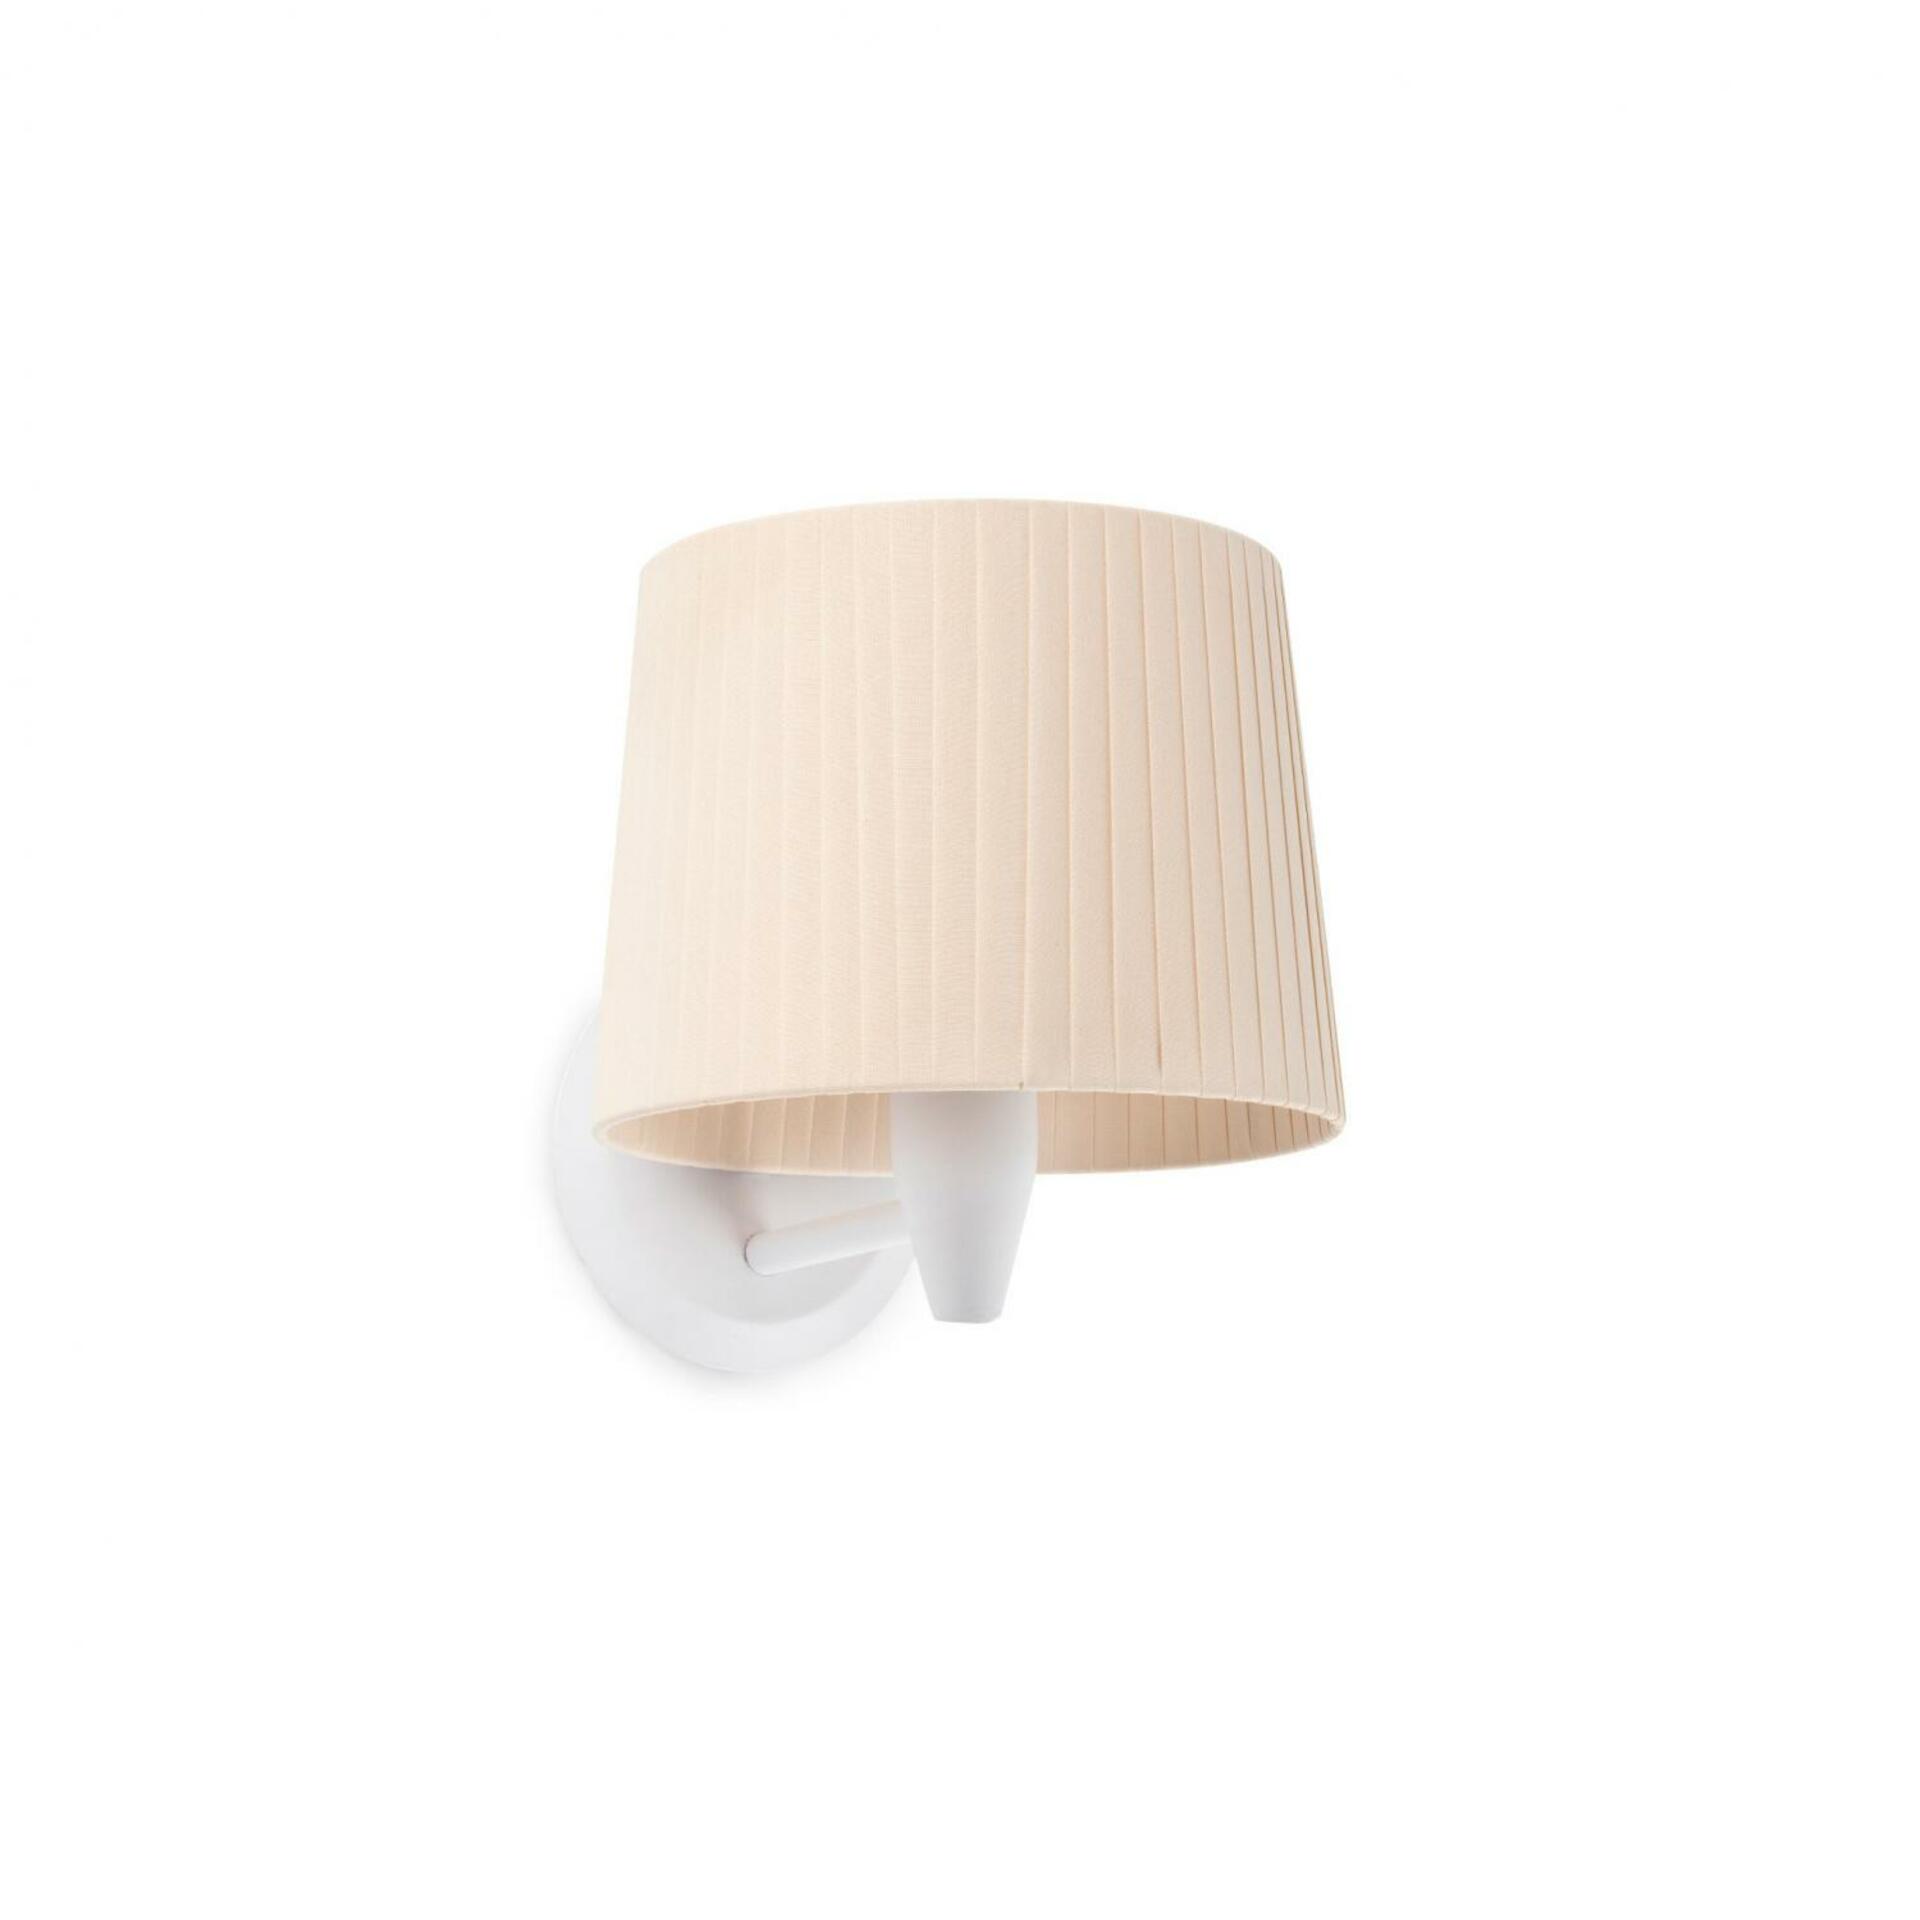 FARO SAMBA bílá/skládaná béžová nástěnná lampa